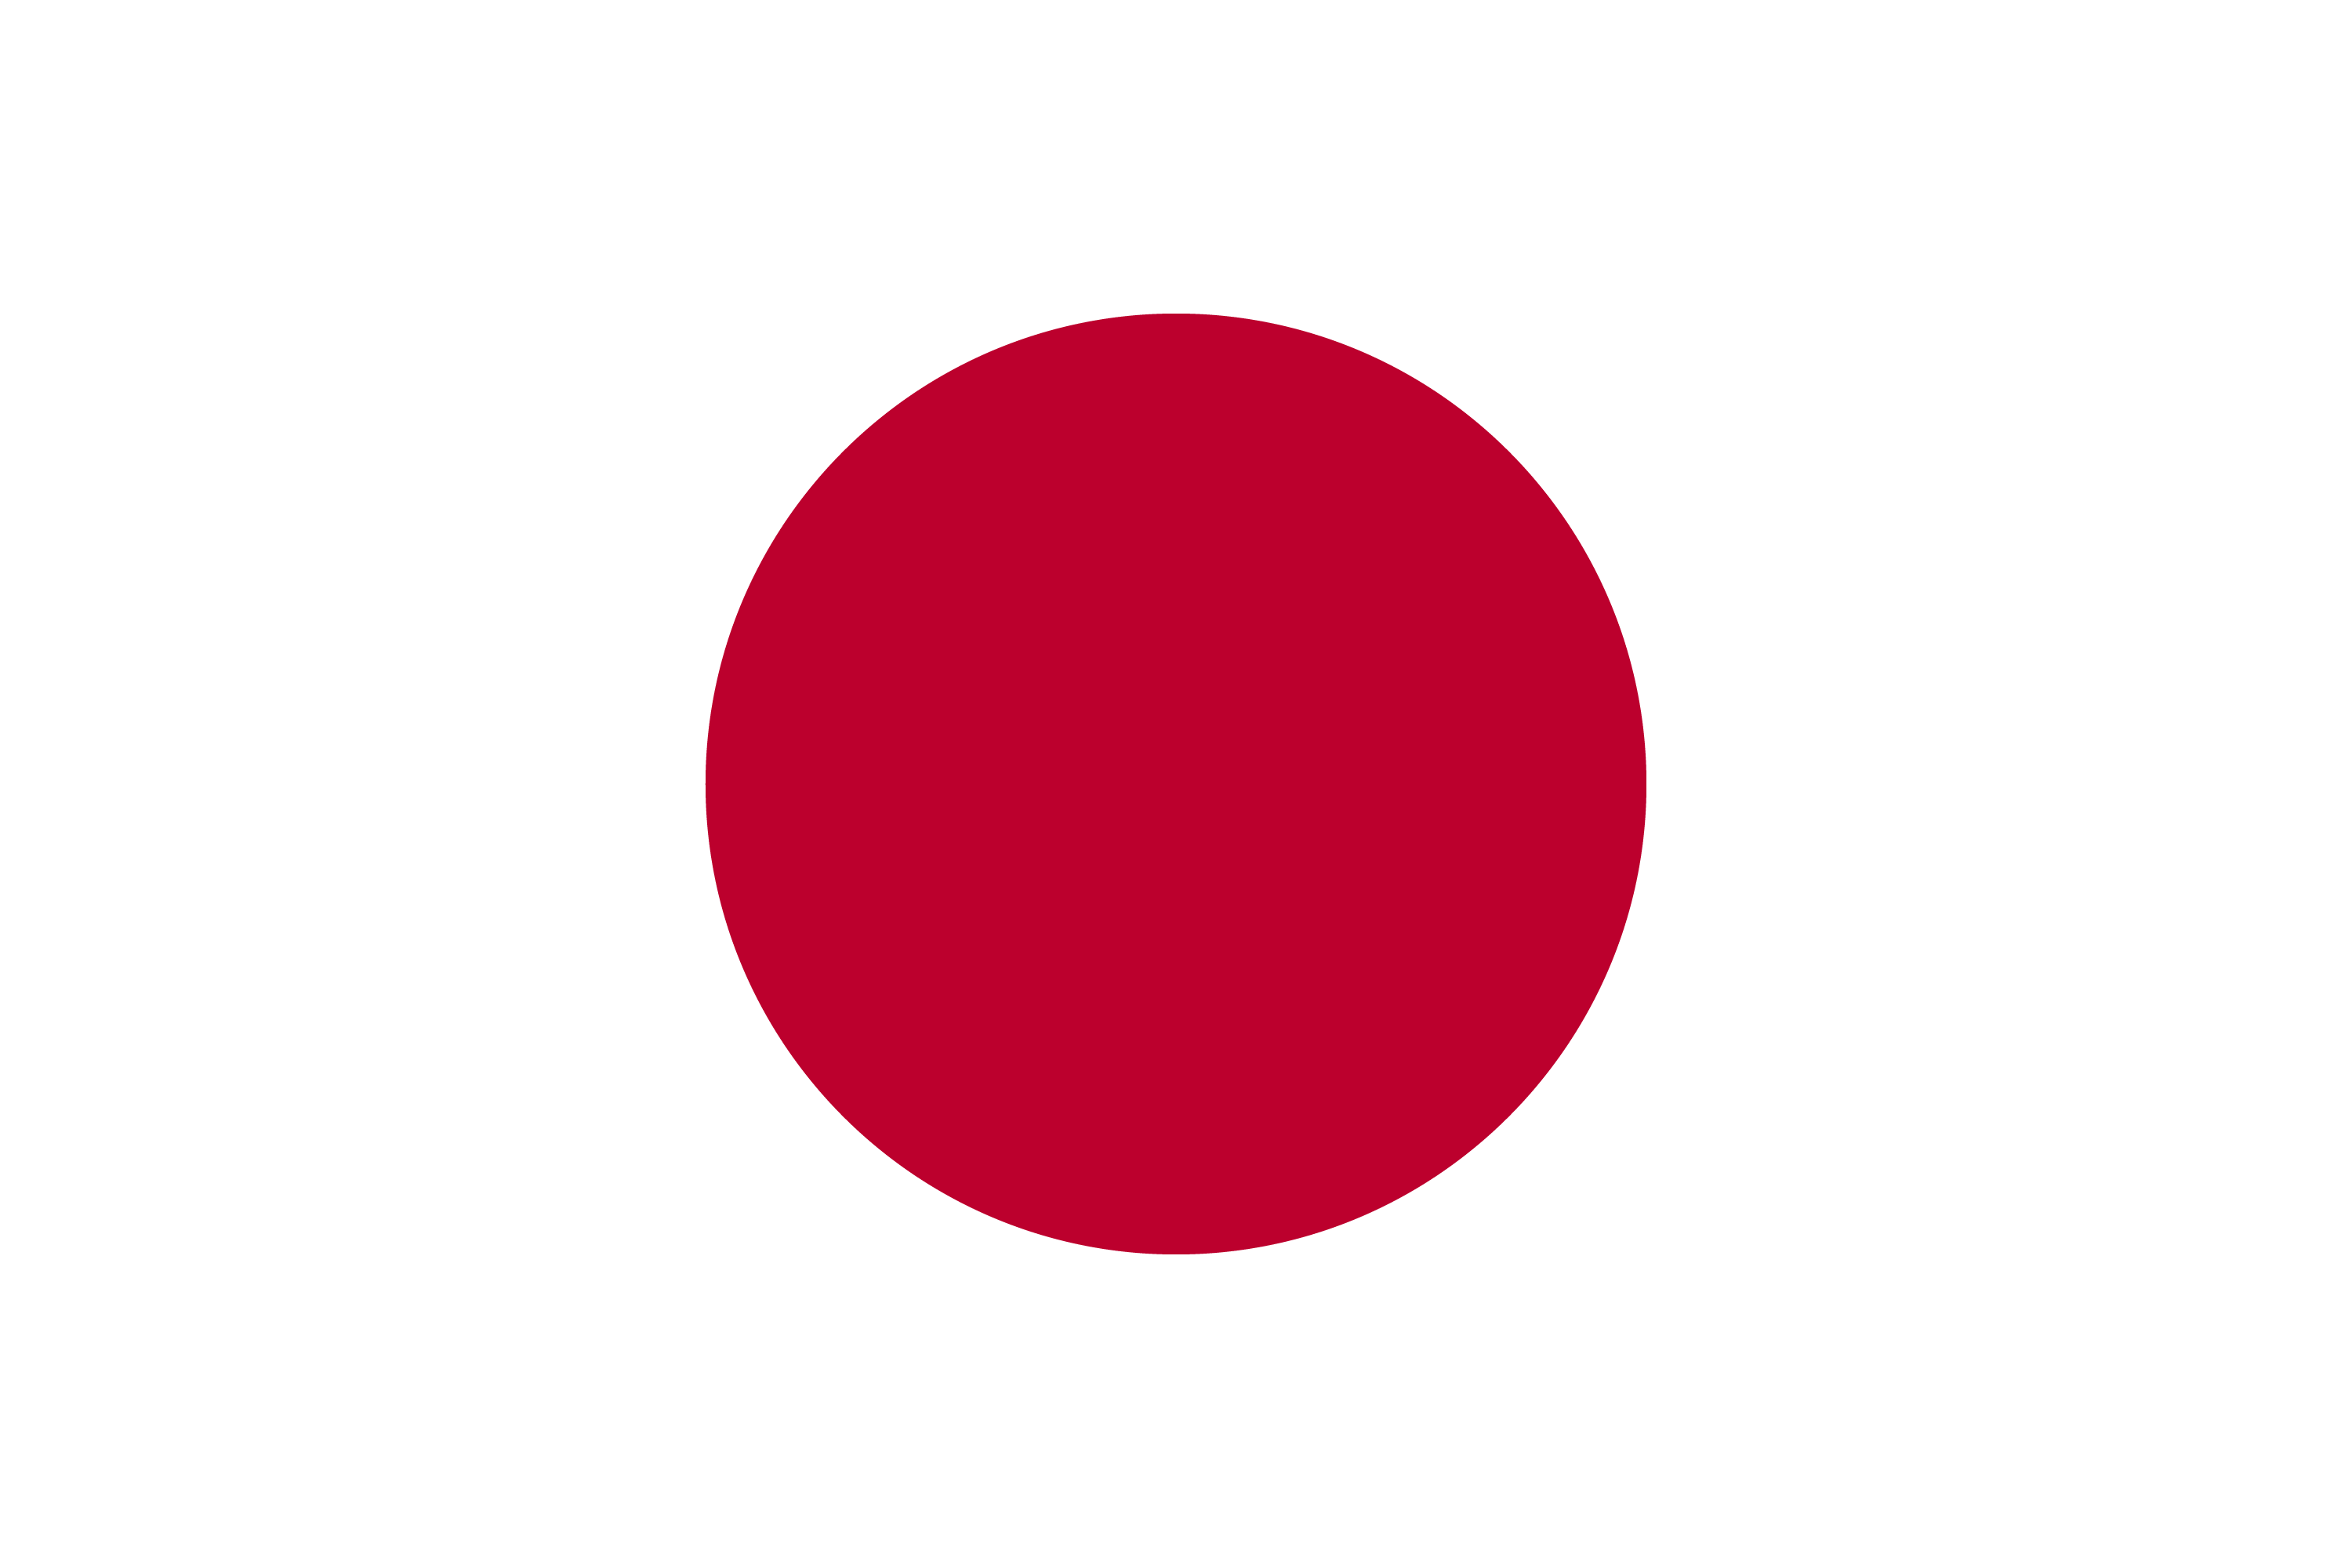 japanese-flag